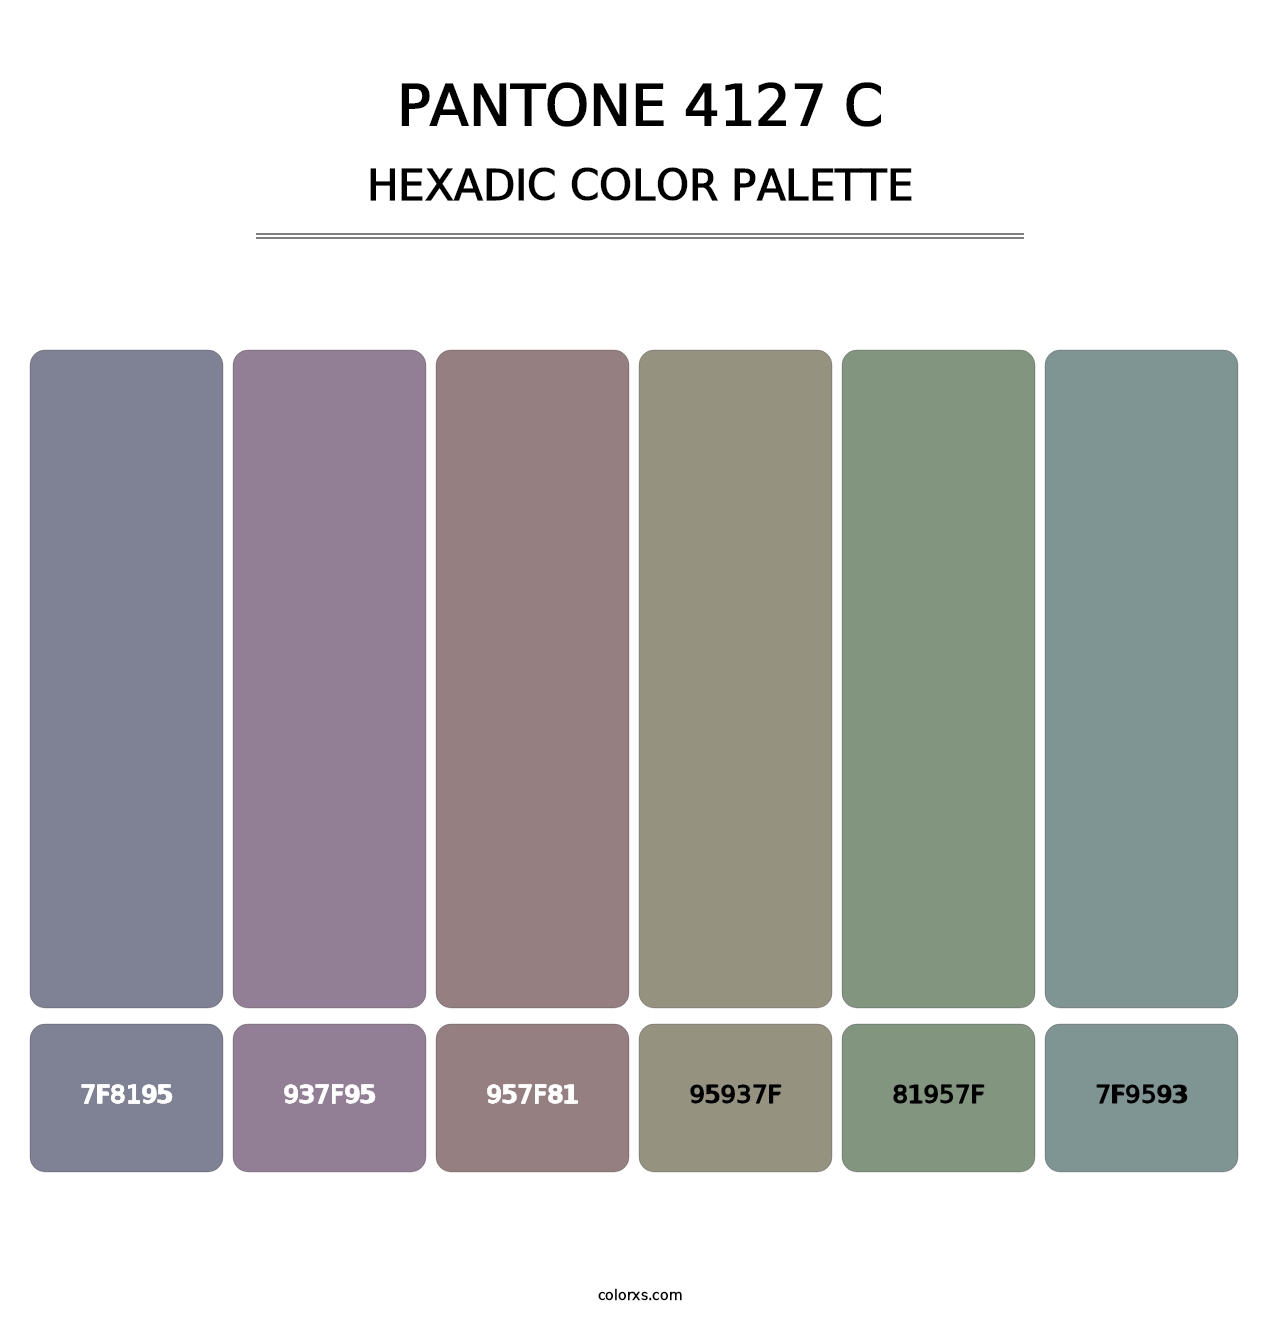 PANTONE 4127 C - Hexadic Color Palette